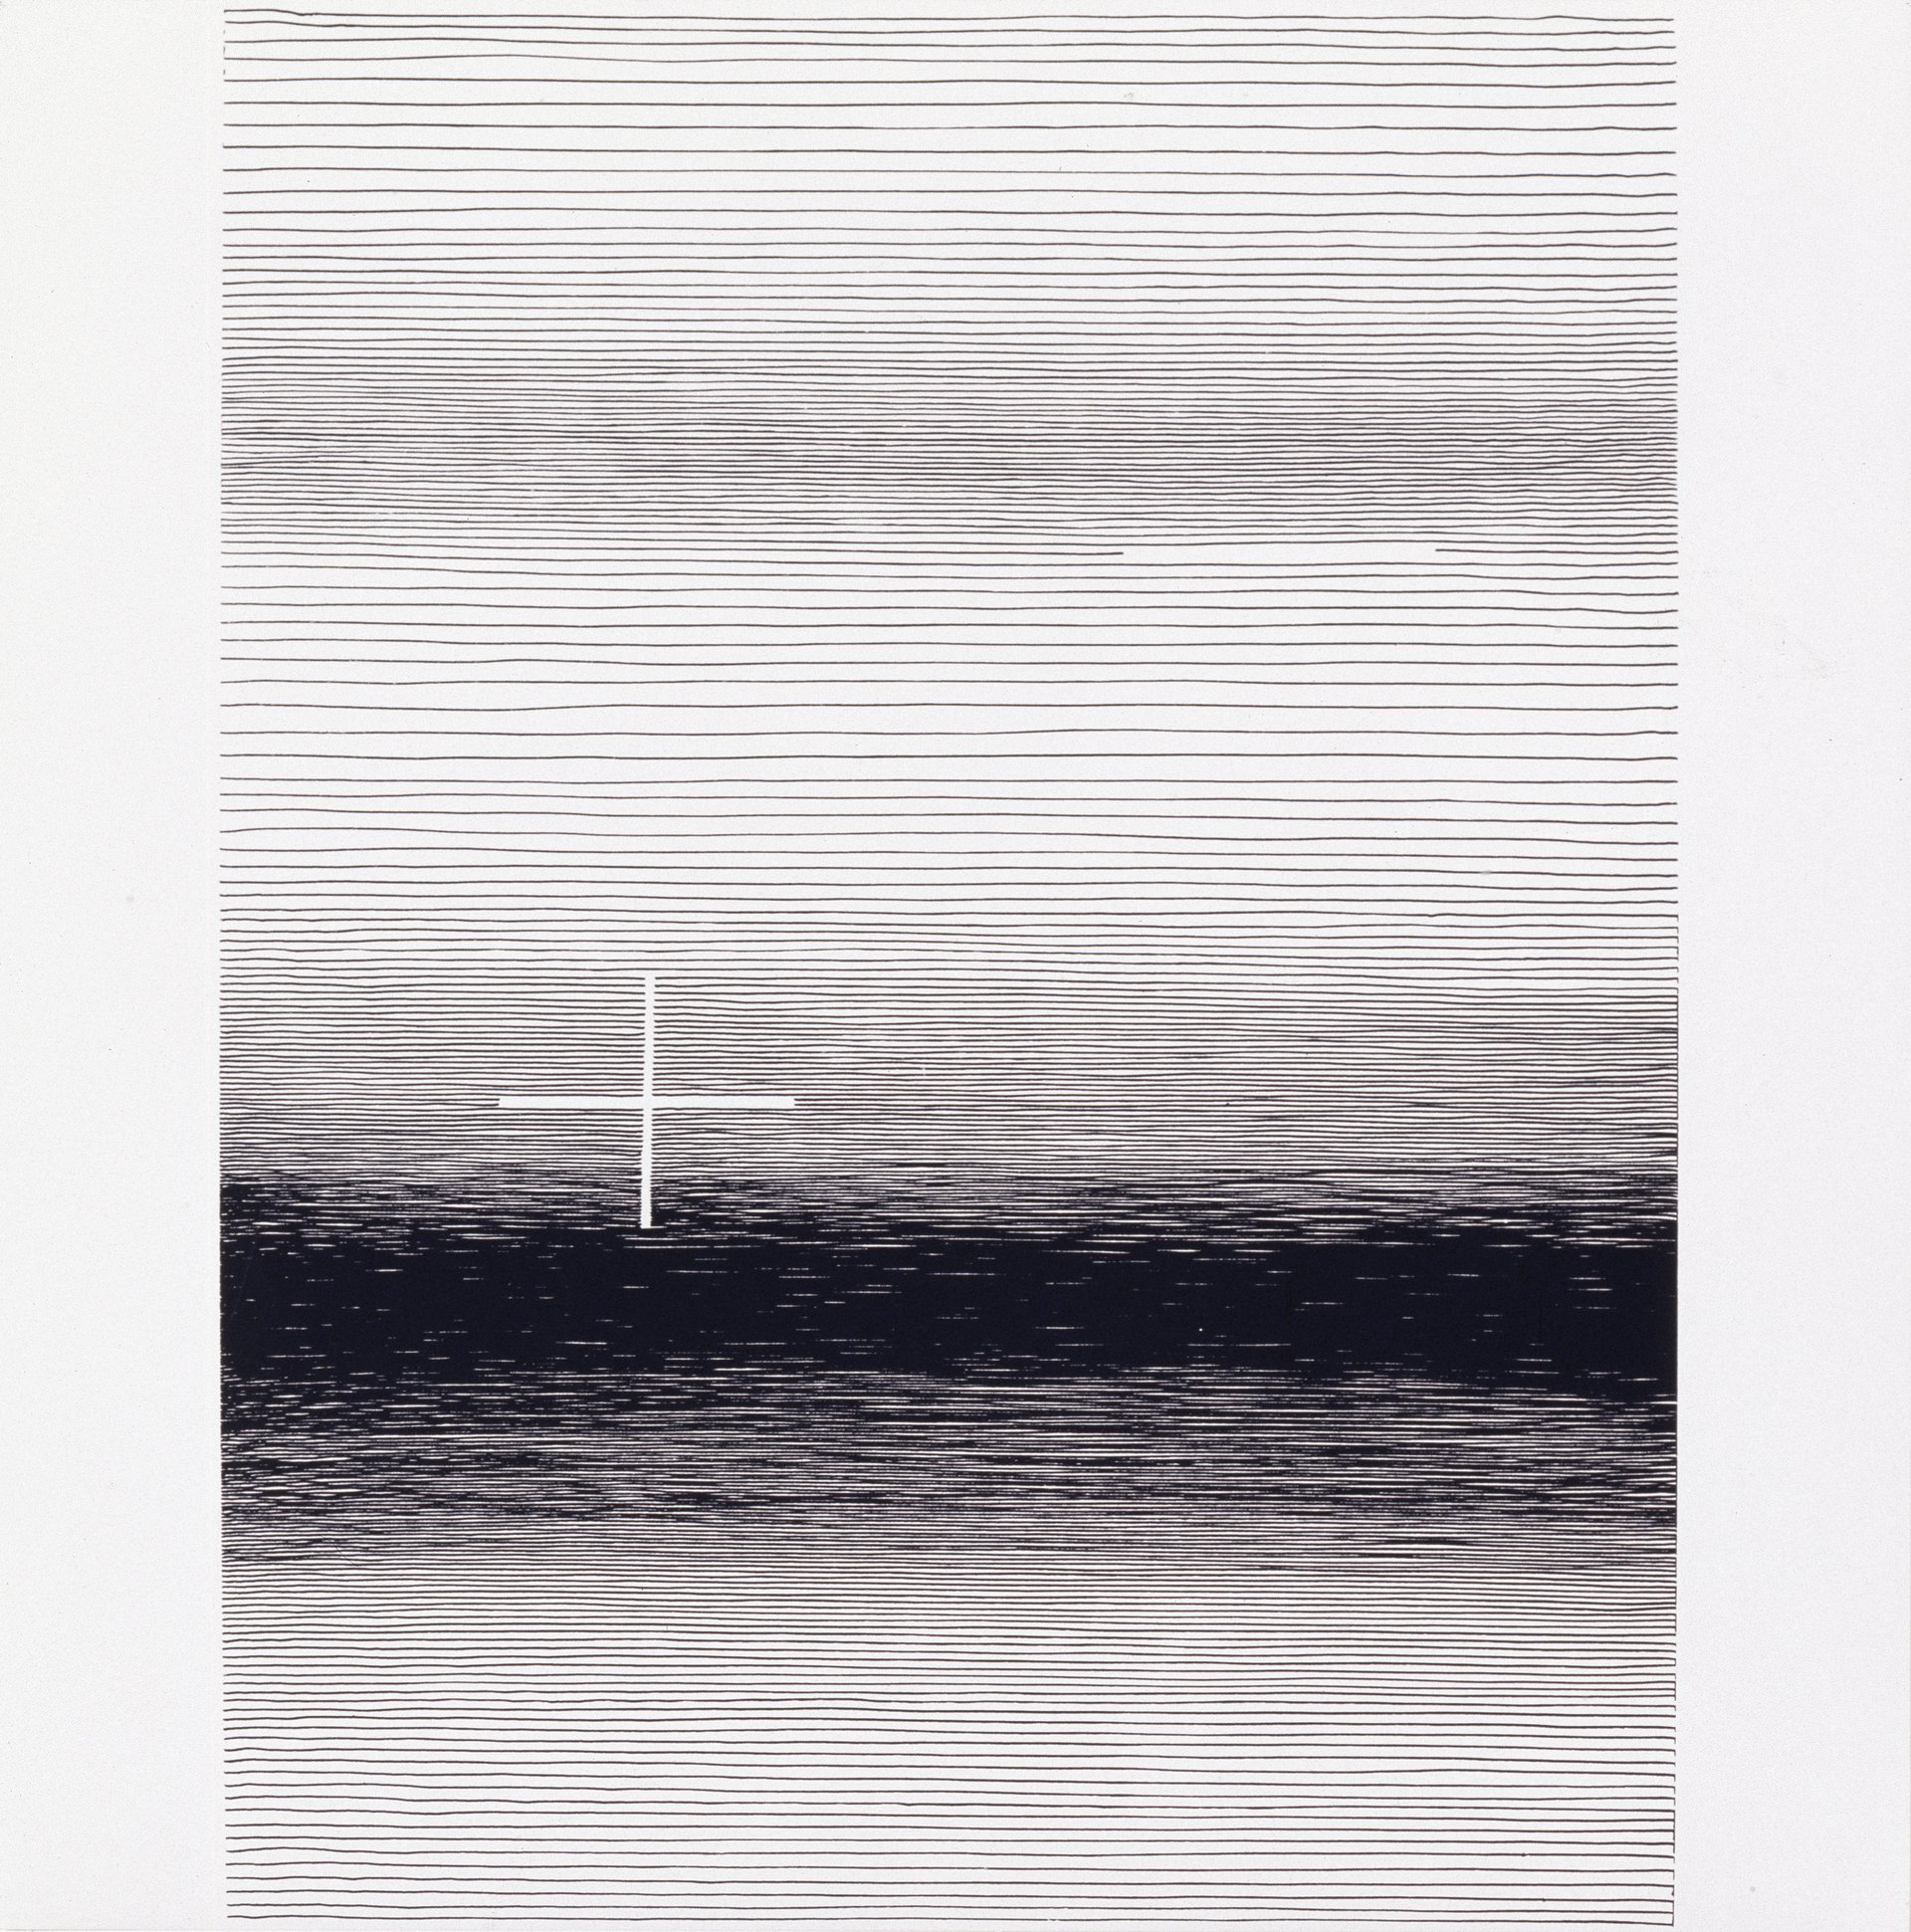 michel seuphor, &quot;+ -&quot; (1970), silkscreen on paper, 60 x 60 cm